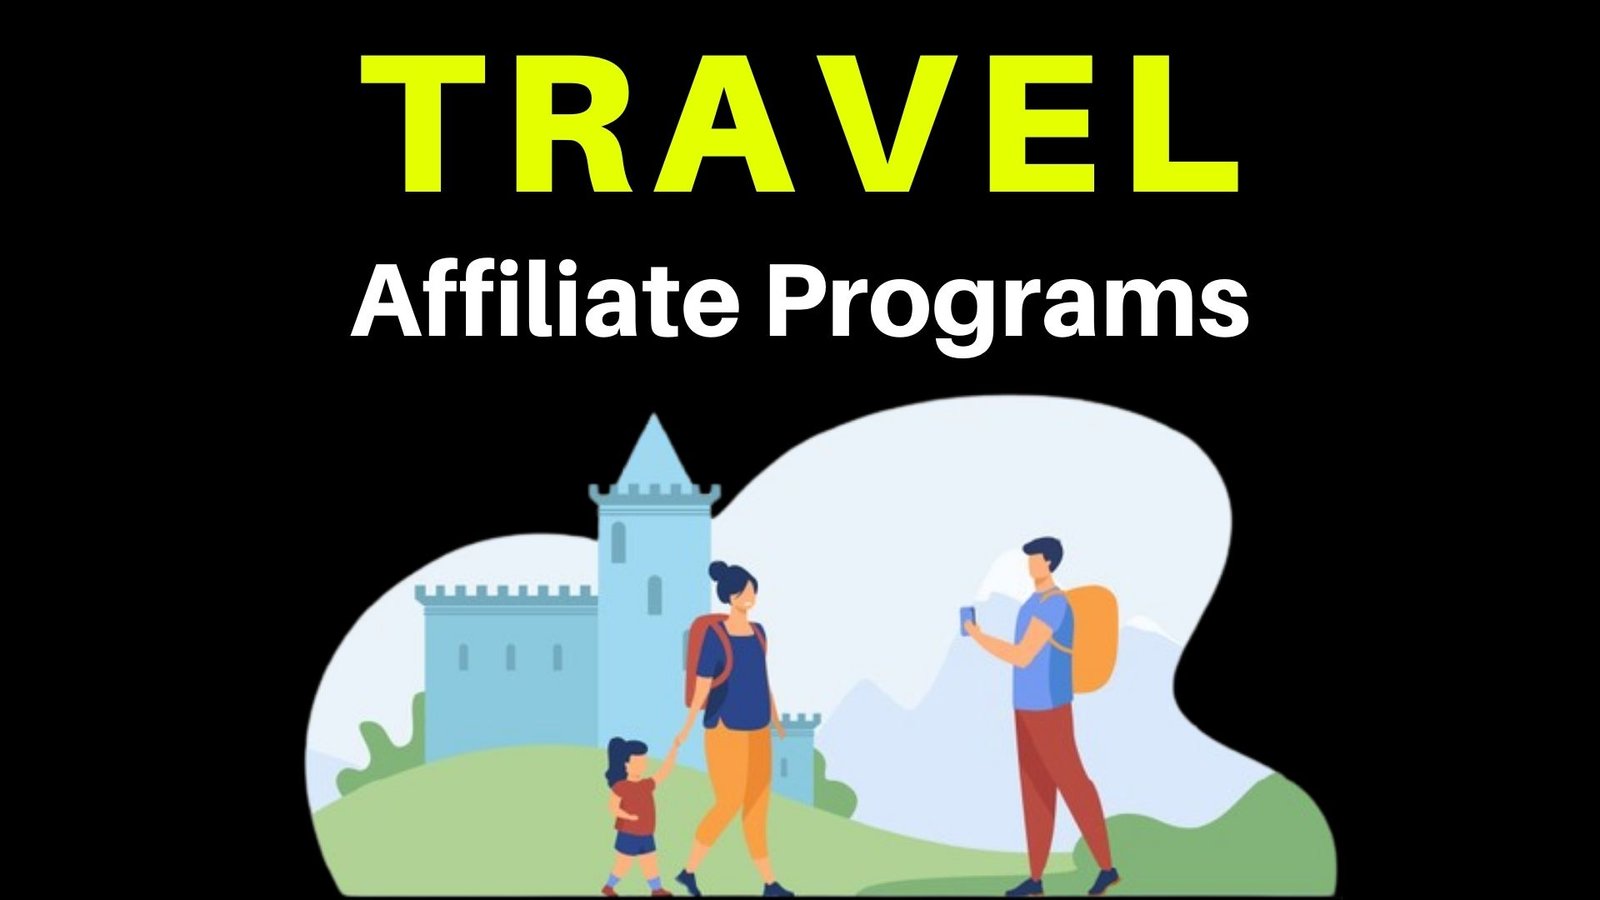 travel affiliate programs 2023